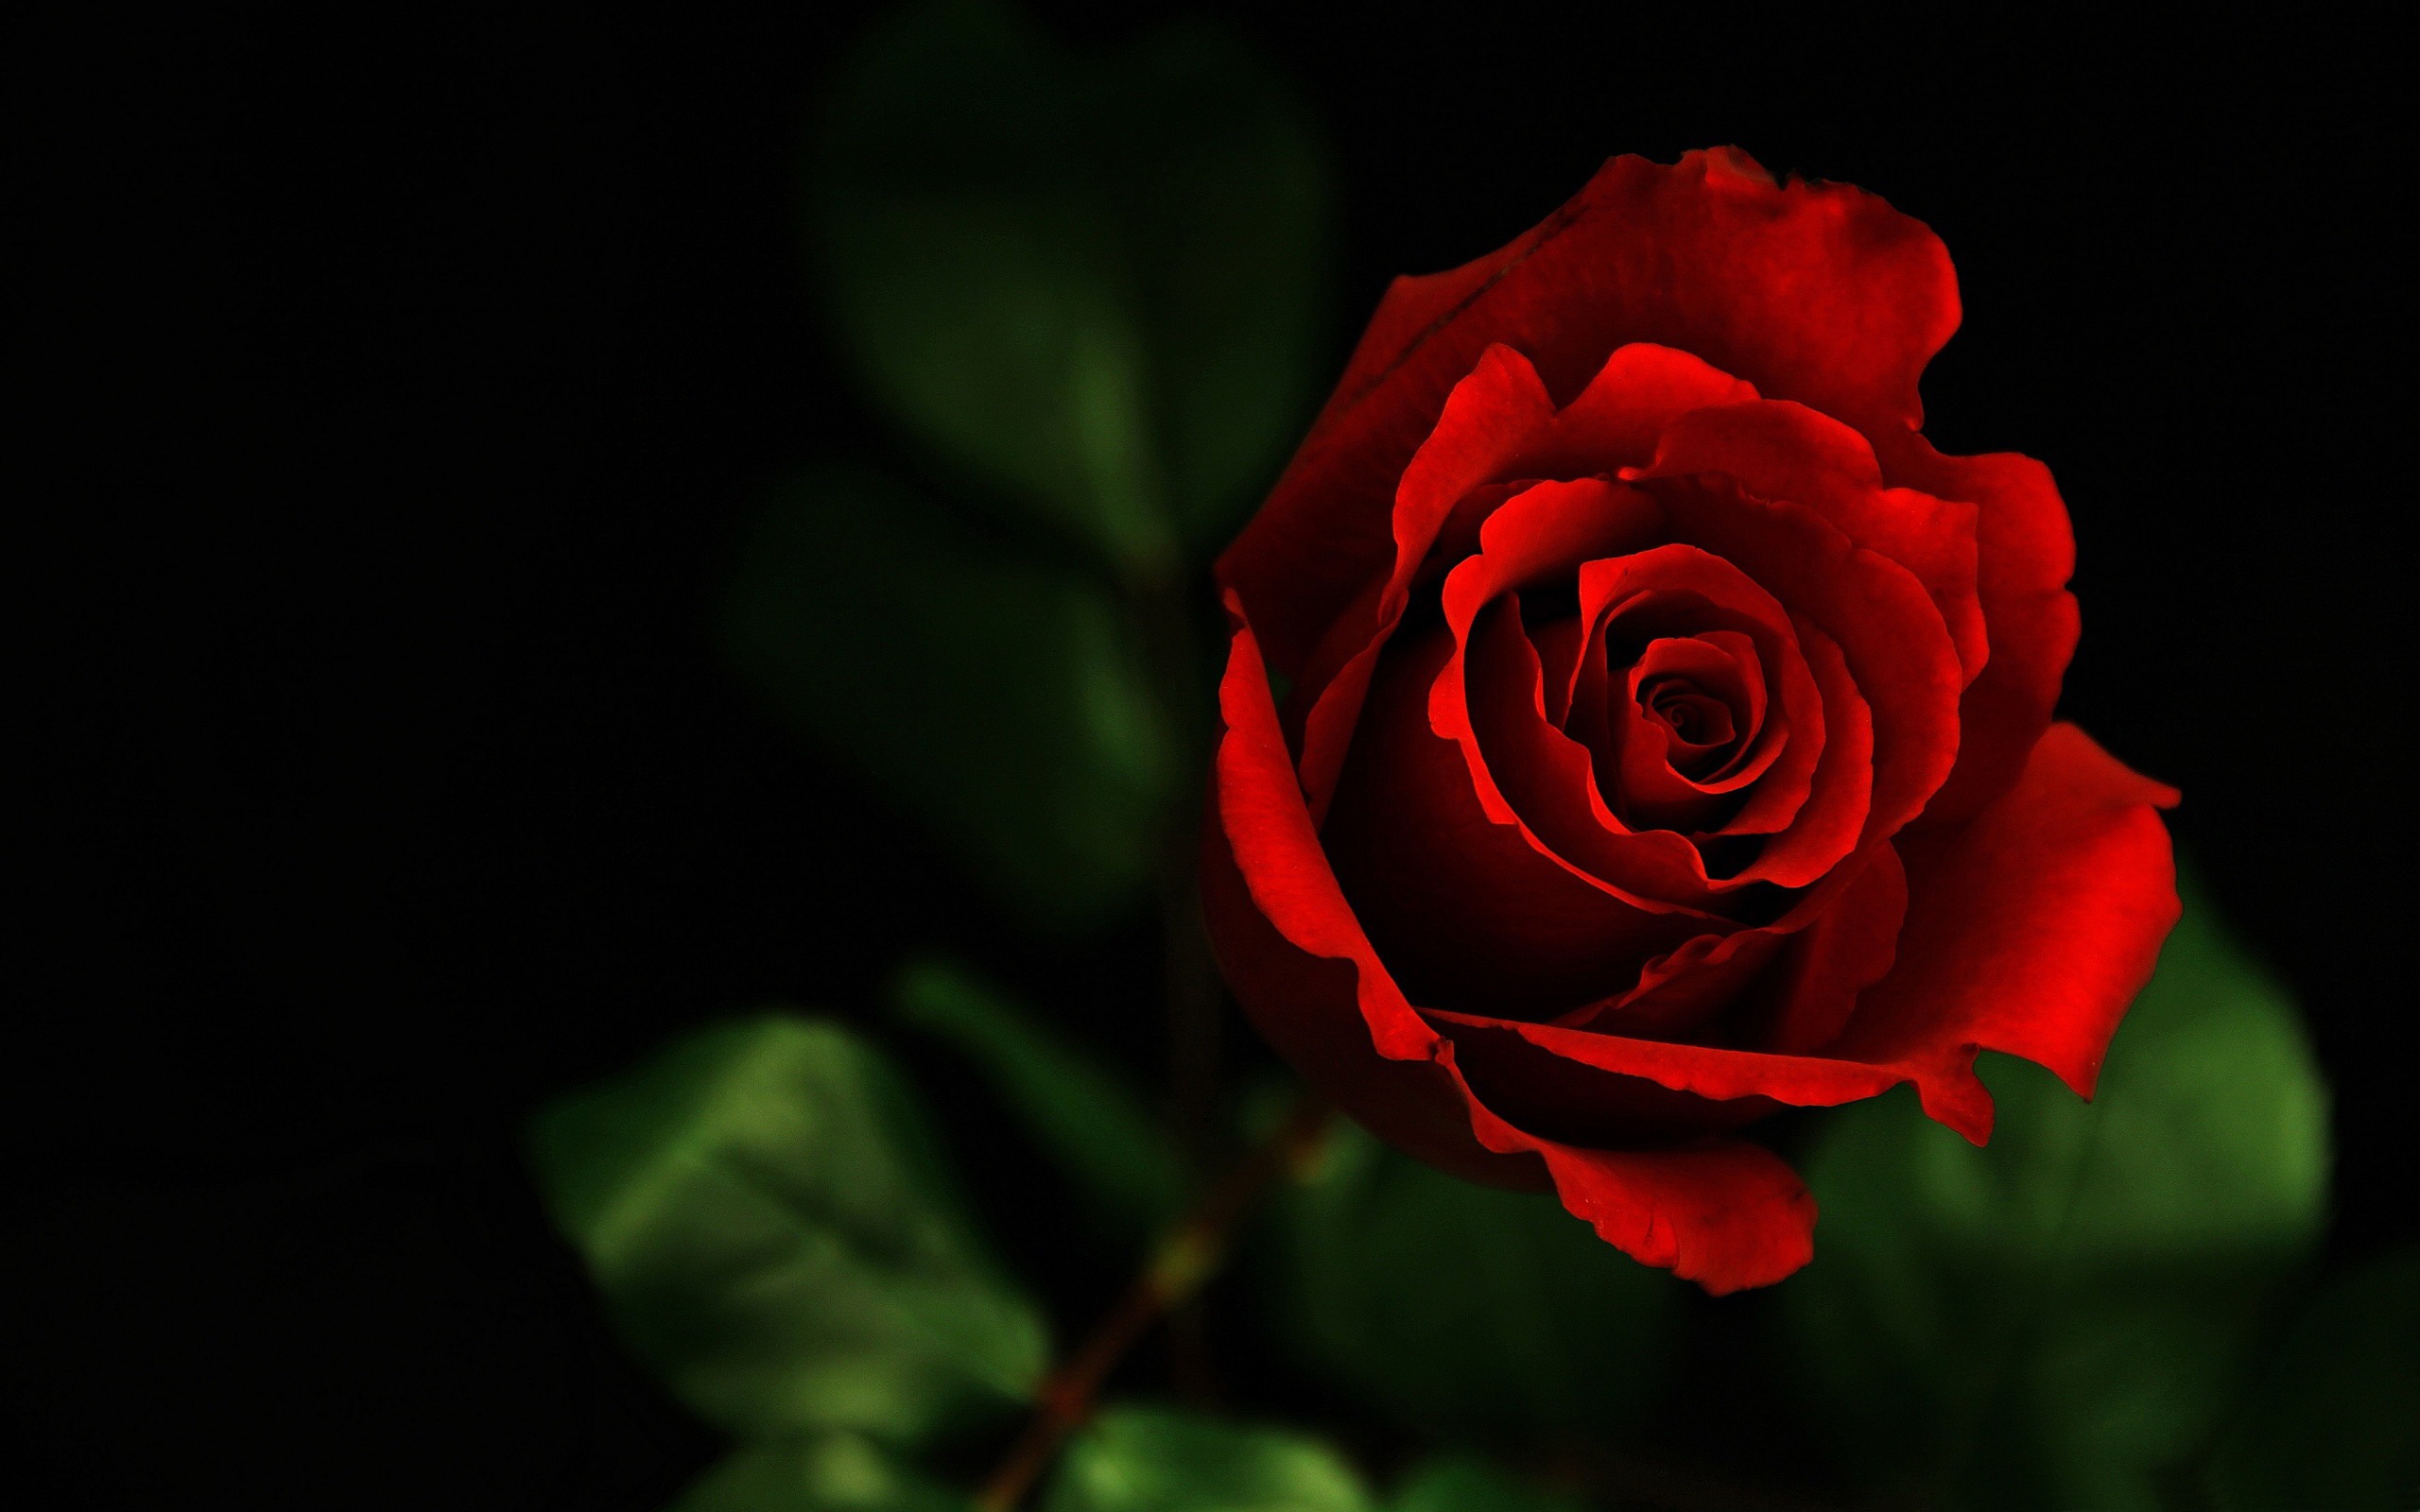 rose flower images free download hd Download